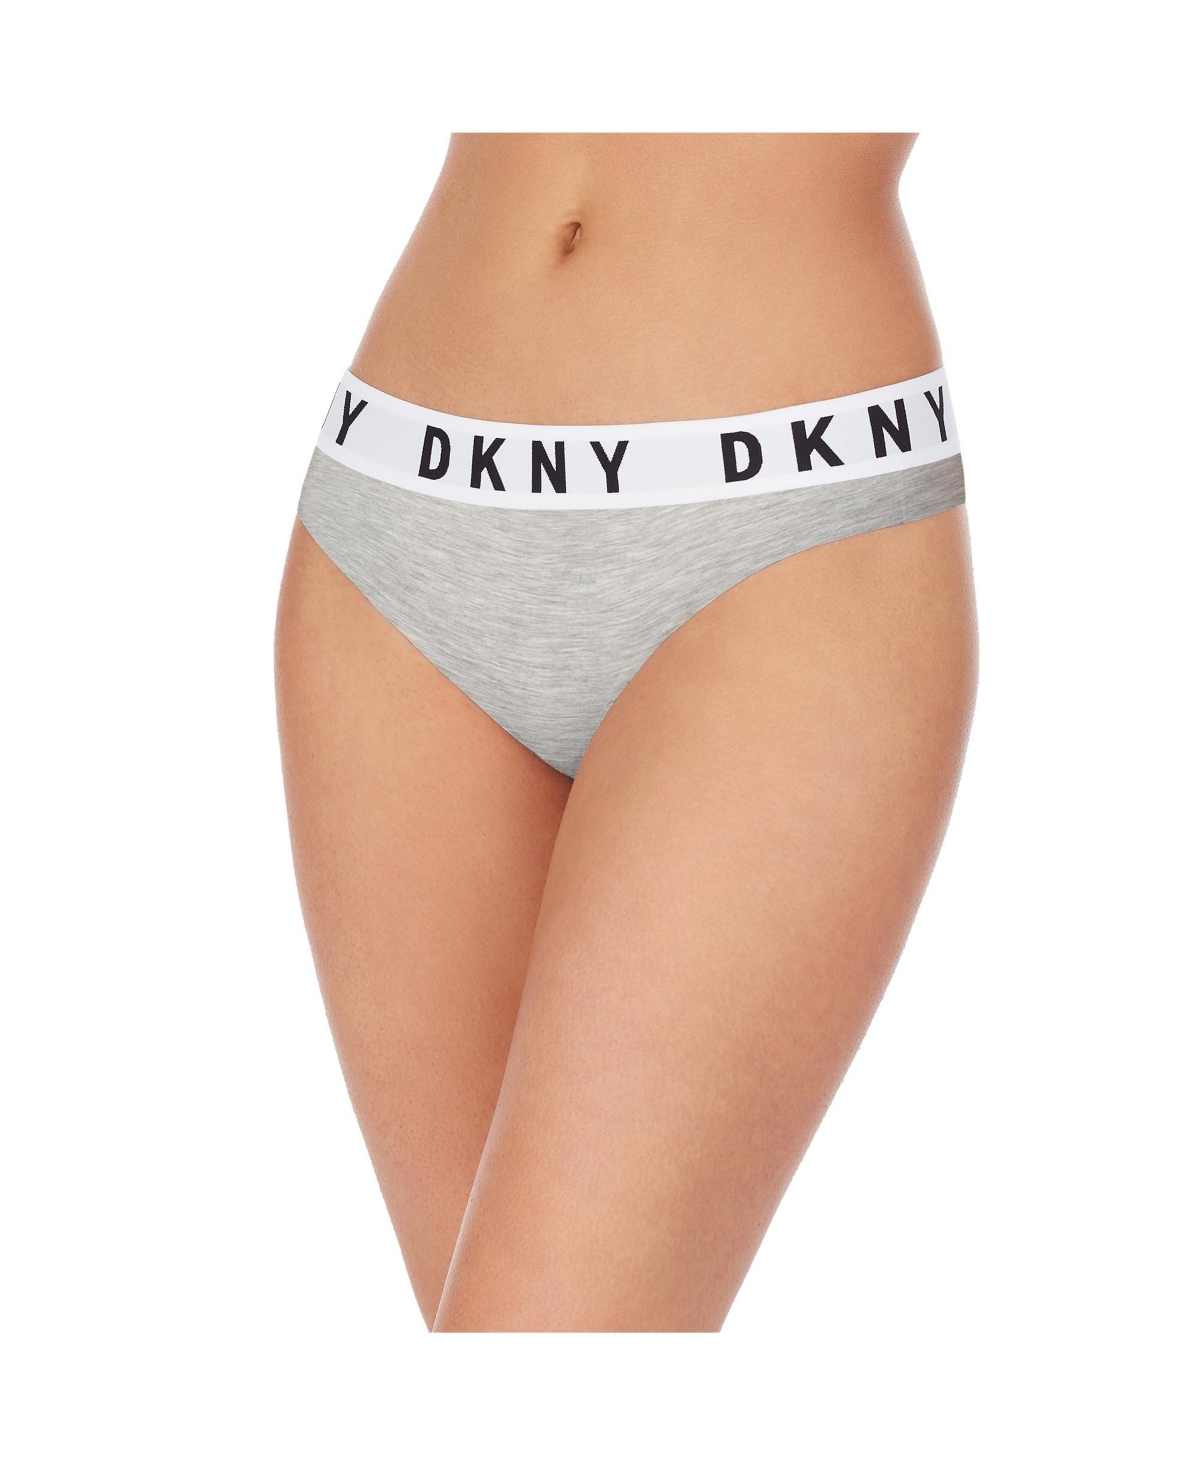 DKNY Women's Litewear Low Rise Thong, Vanilla, Large 